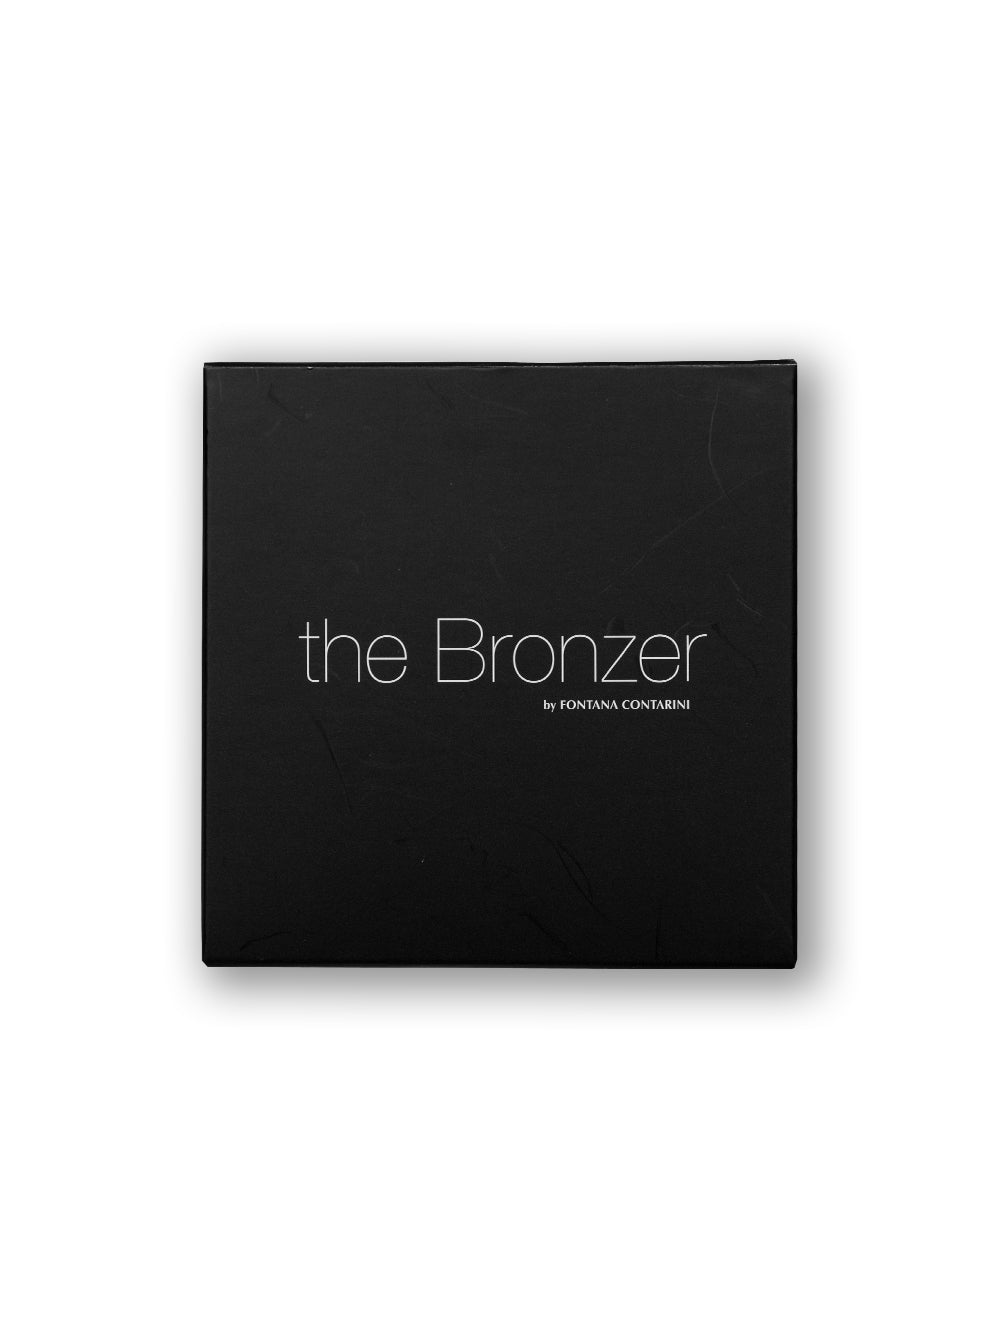 The Bronzer Compact Powder